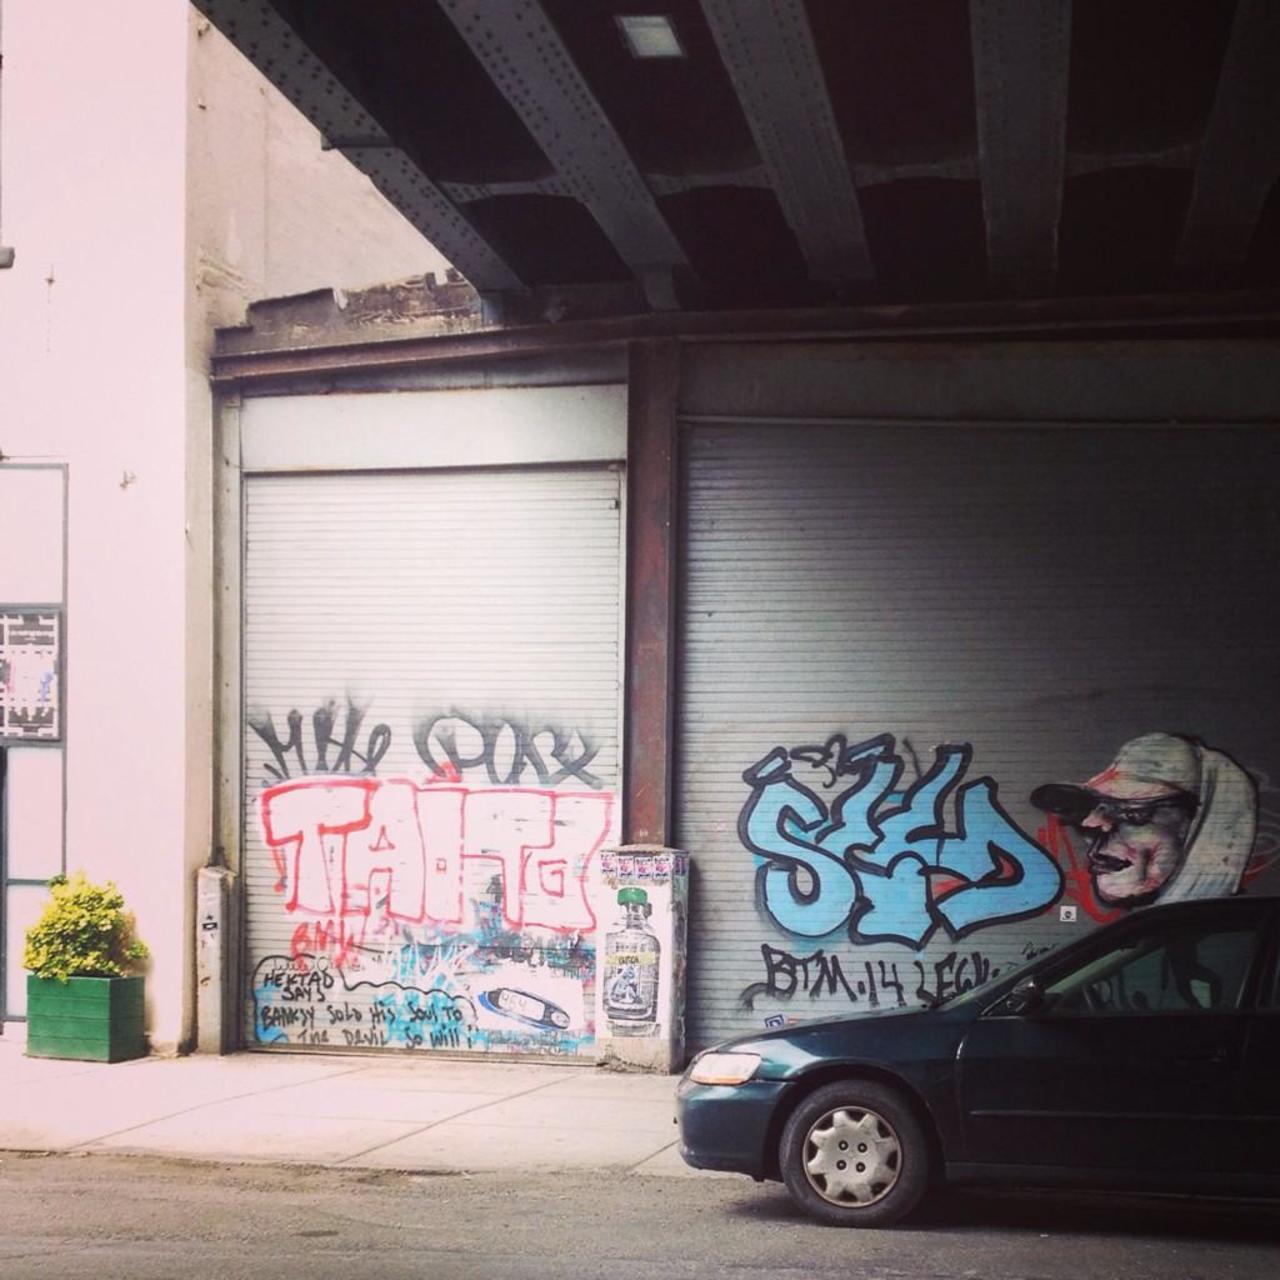 New York graffiti - Chelsea #iamsoojin #streetart #graffiti #newyork #chelsea #urbanculture #streetwear #art #fashion http://t.co/wmCY3qU1od